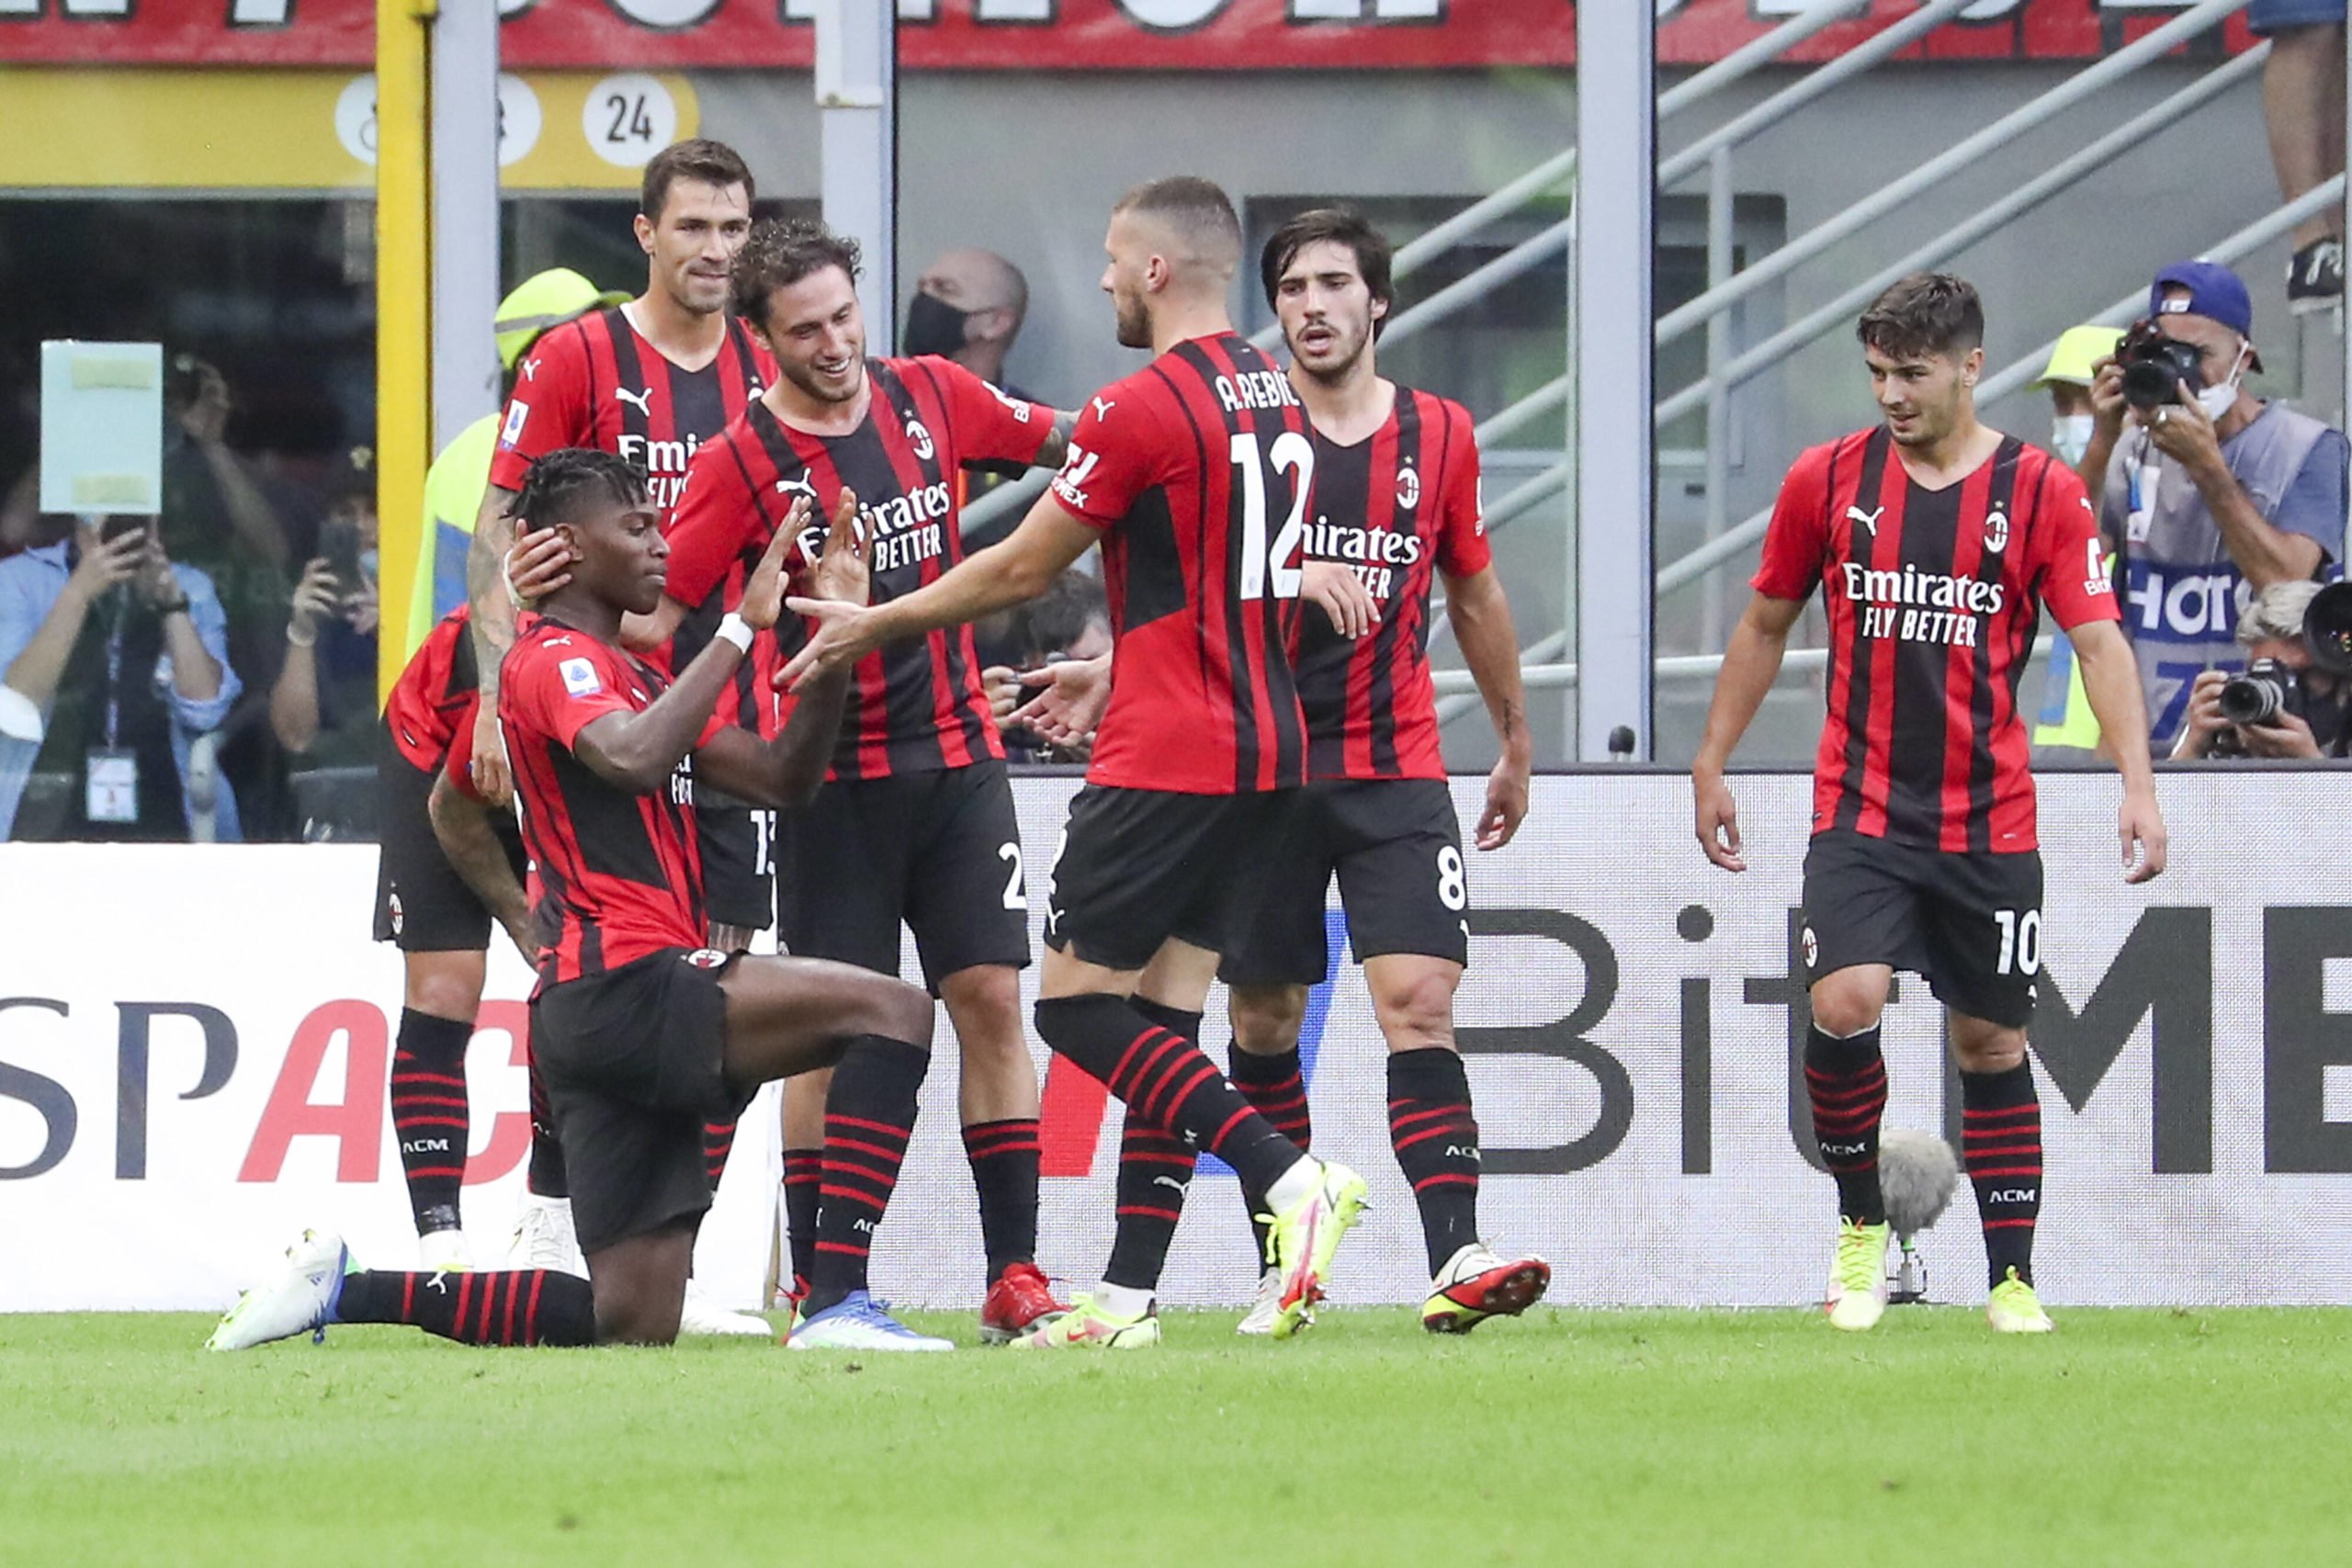 AC Milan players celebrating a goal against Lazio 